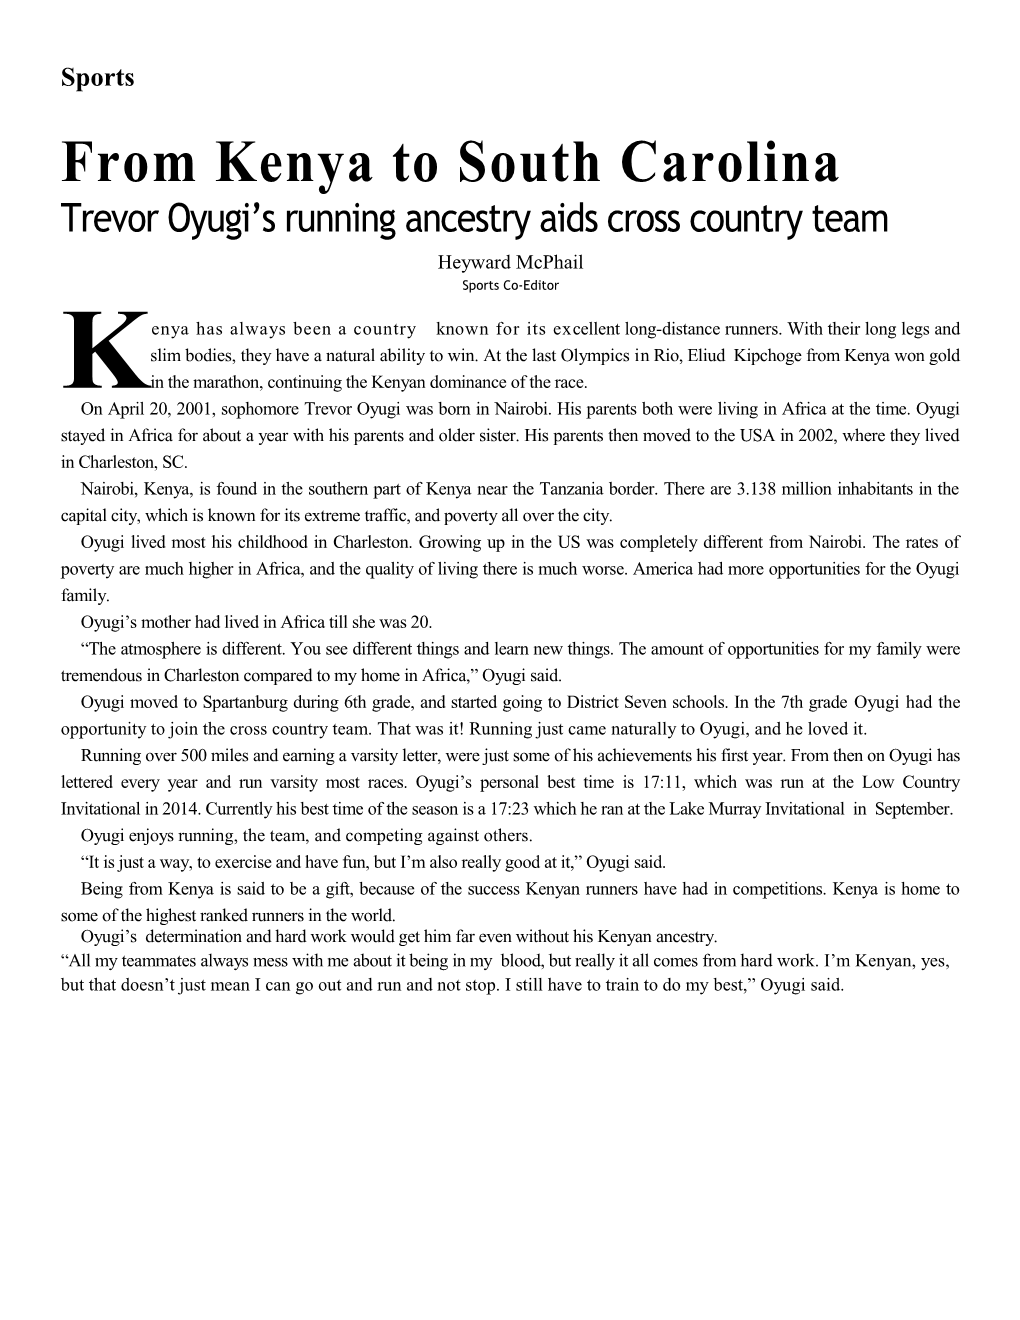 From Kenya to South Carolina